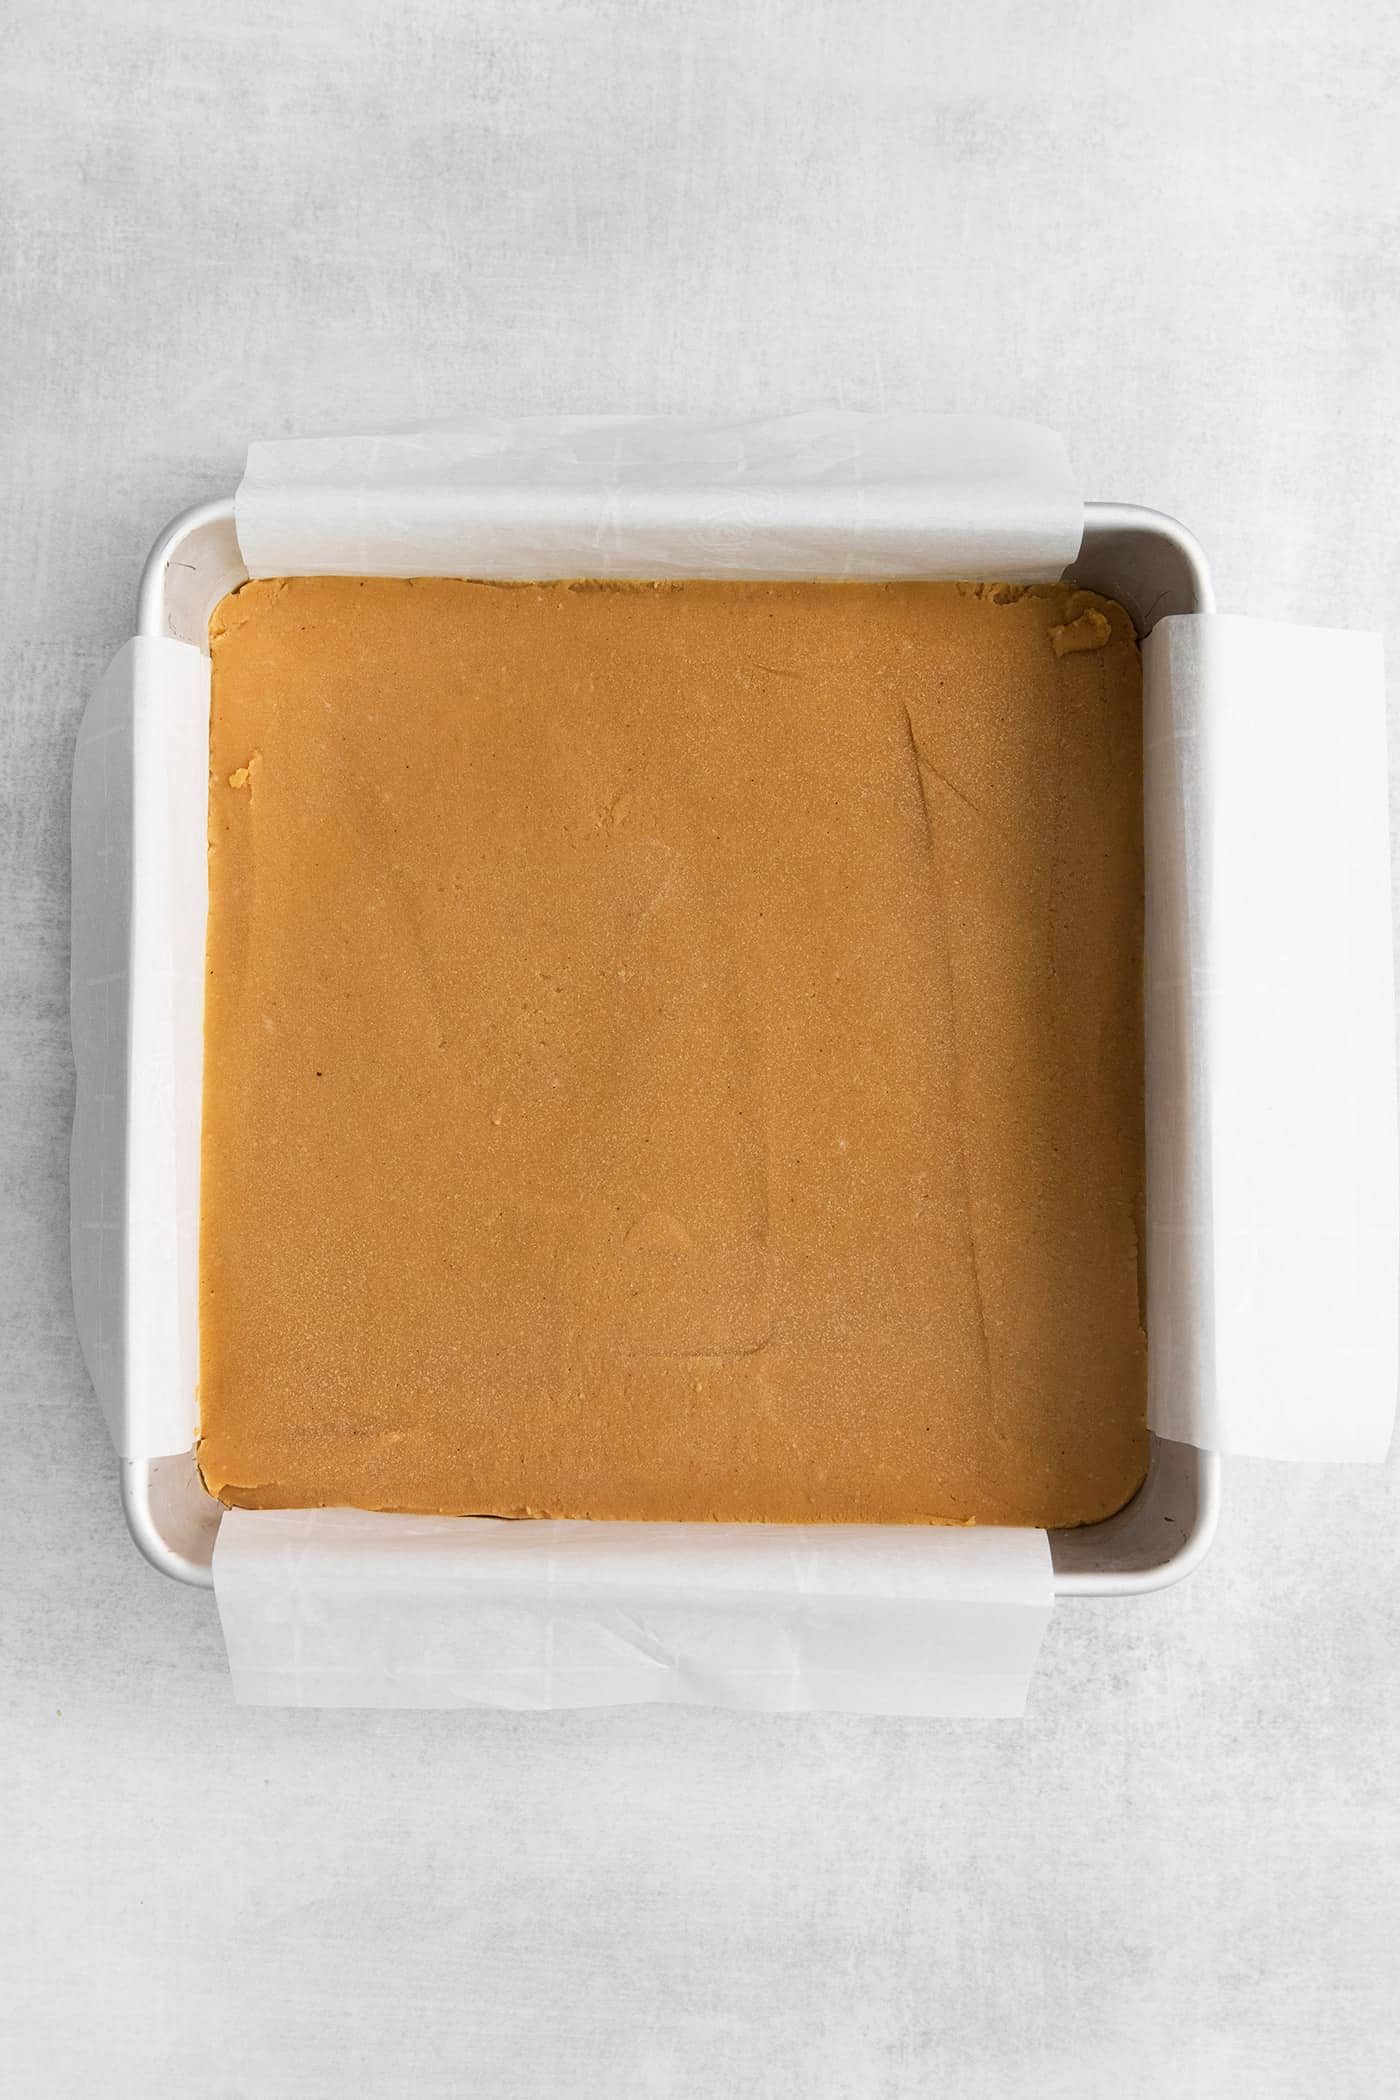 Peanut butter fudge in an 8x8 pan